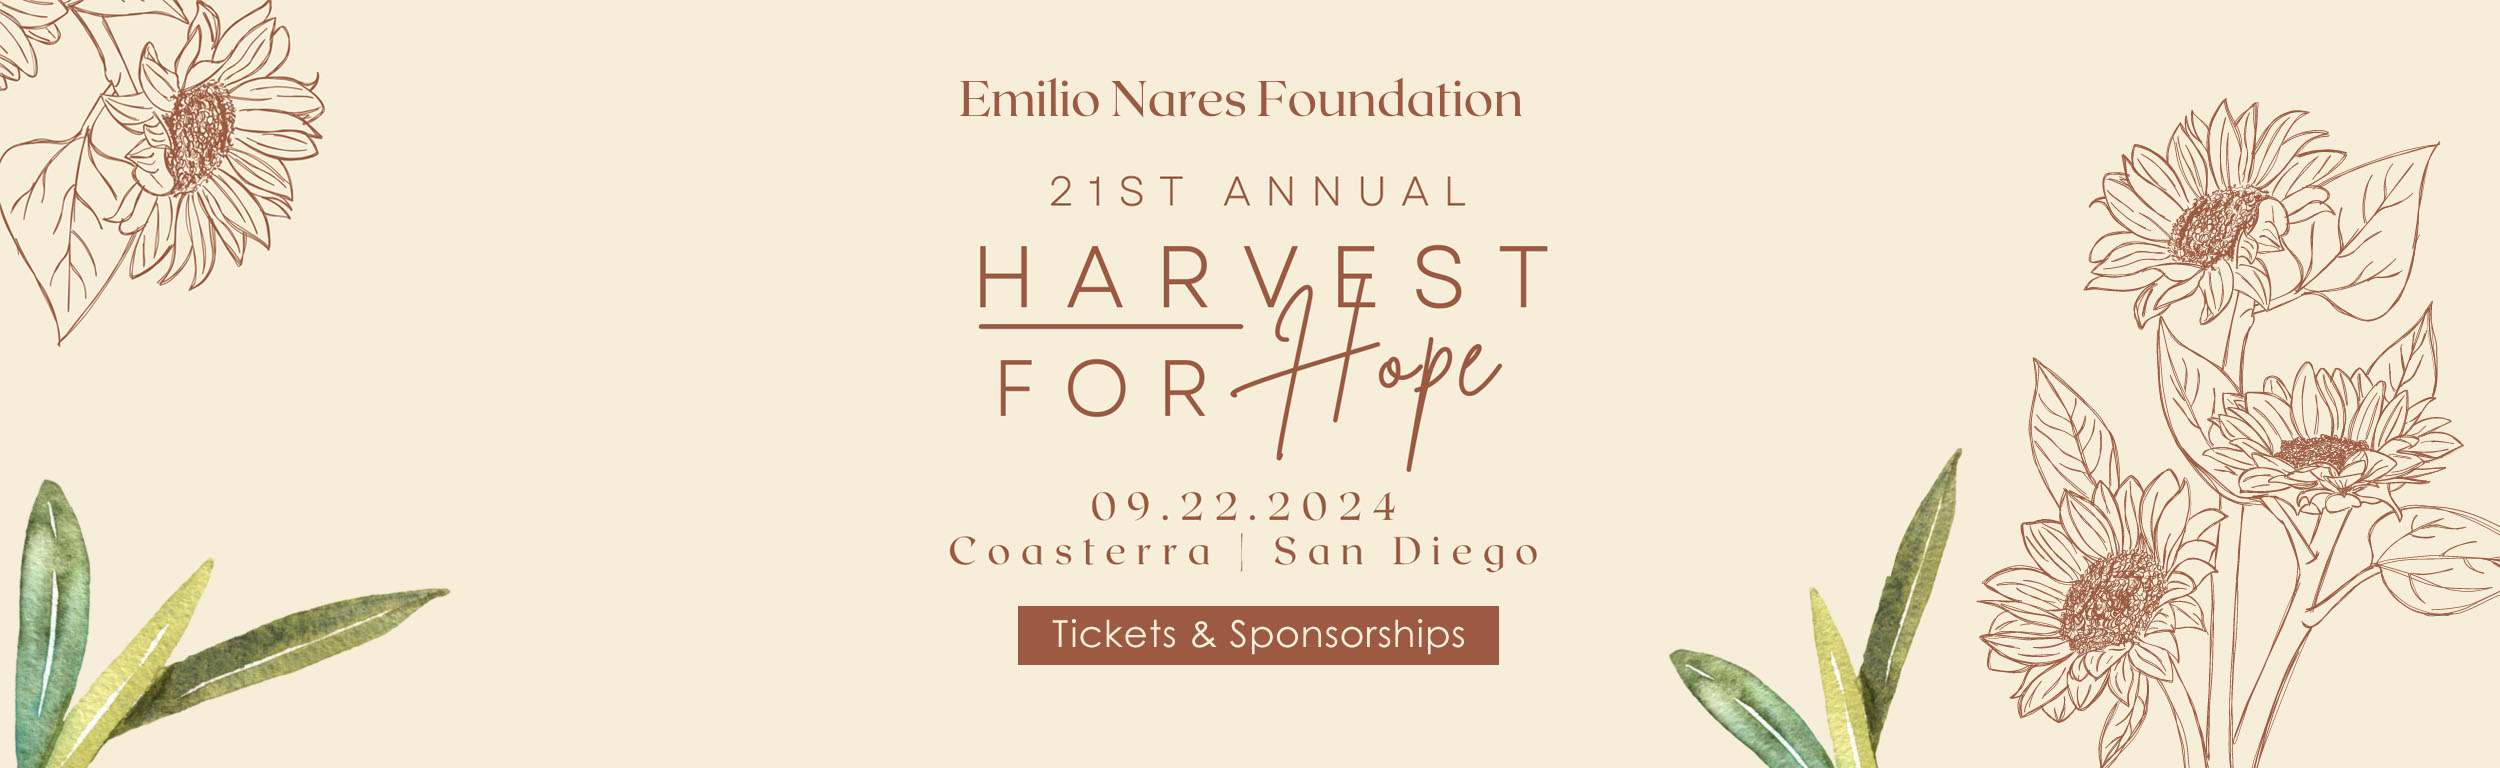 Emilio Nares Foundation Harvest for Hope